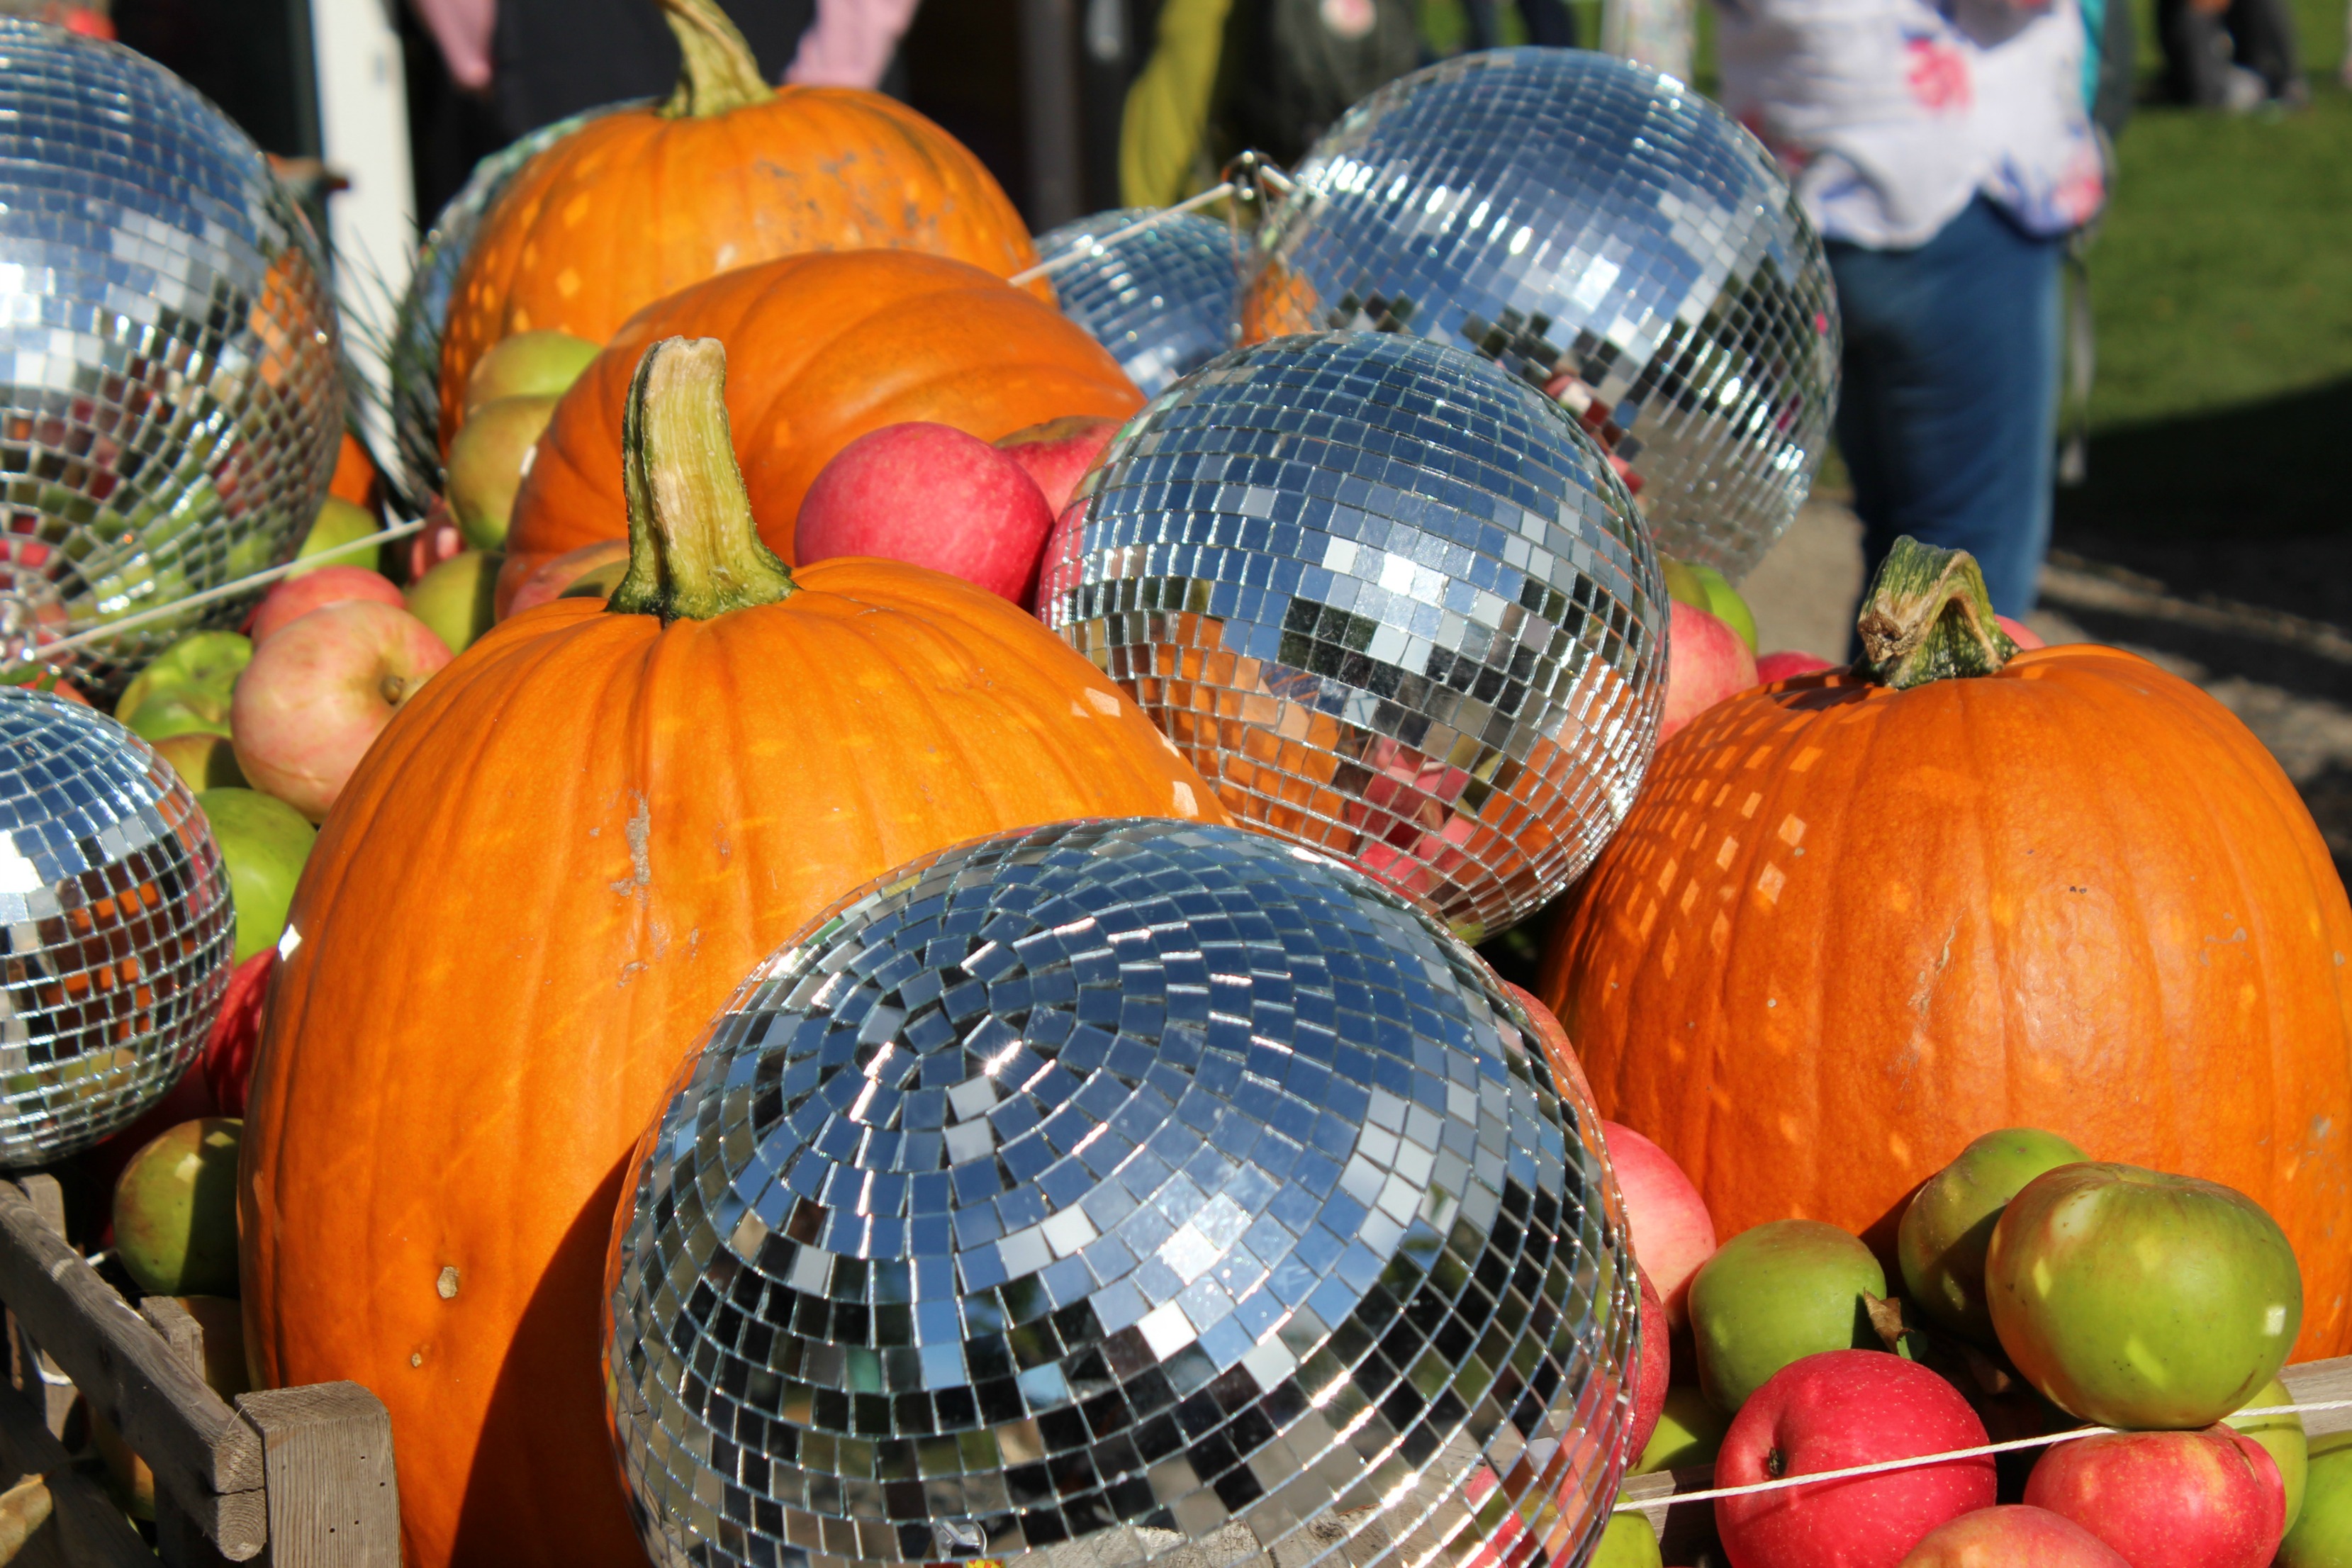 disco-balls-and-pumpkins-good-life-experience-61